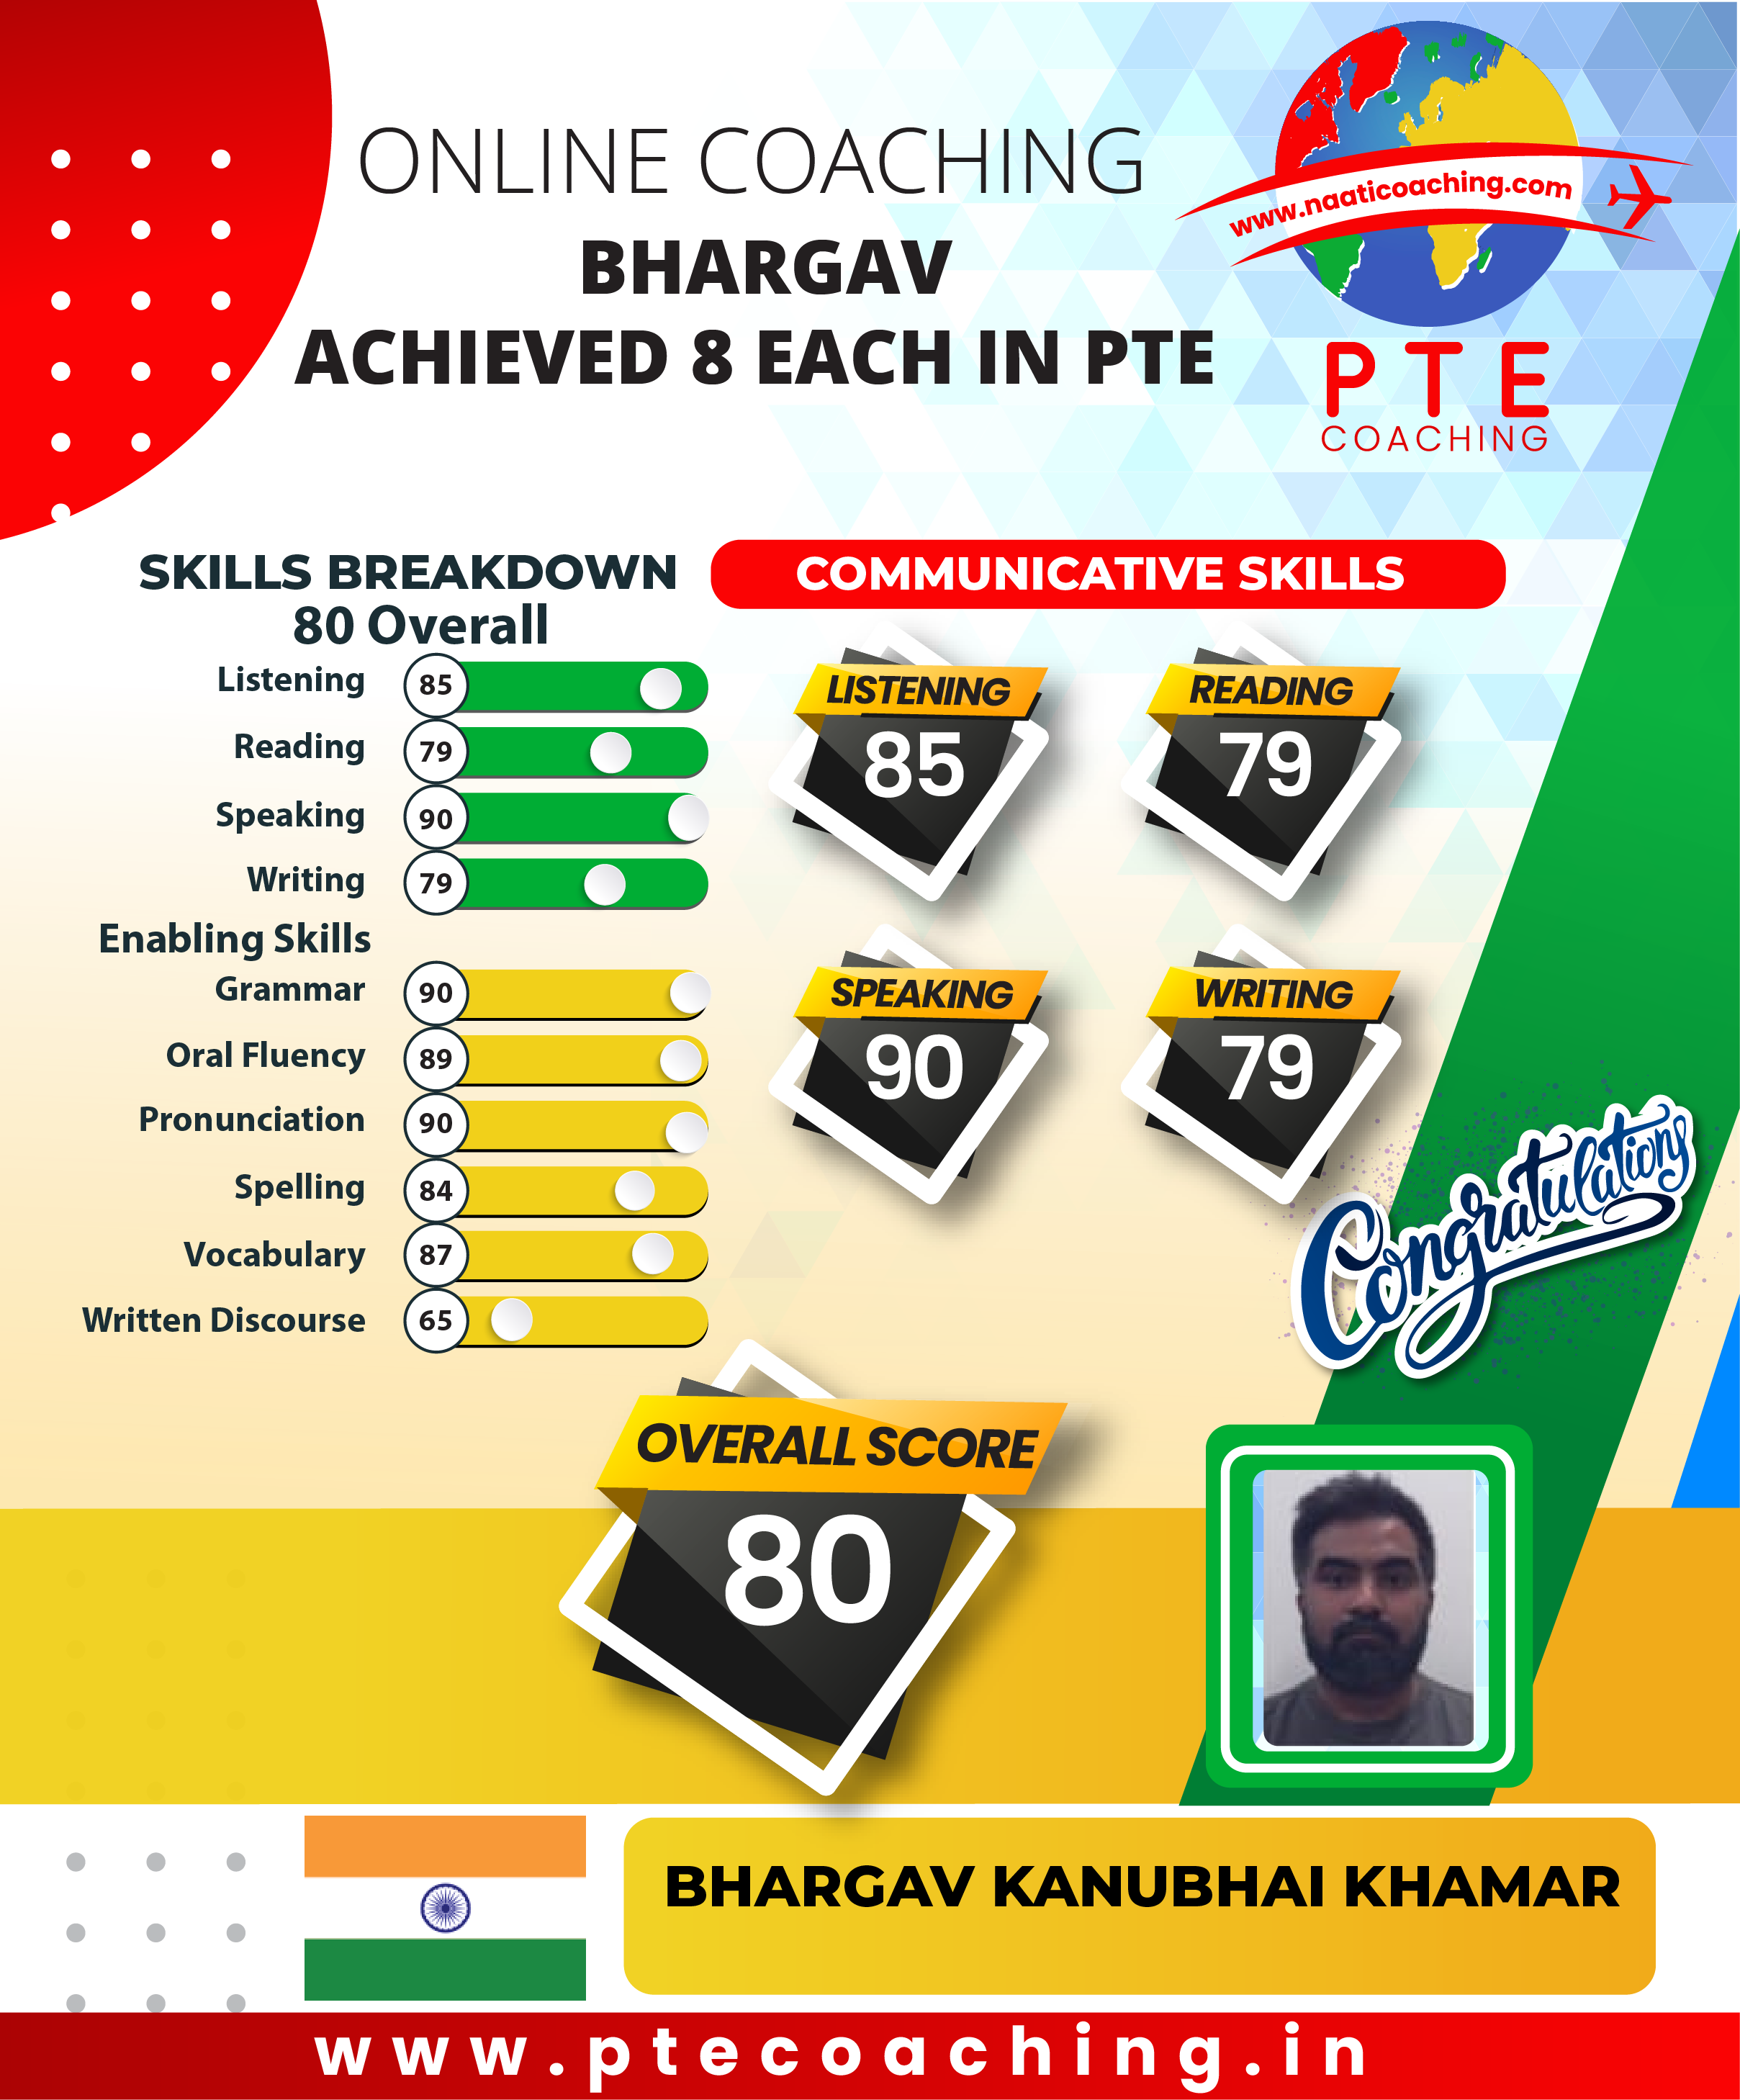 PTE Coaching Scorecard - Bhargav achieved 8 each in PTE